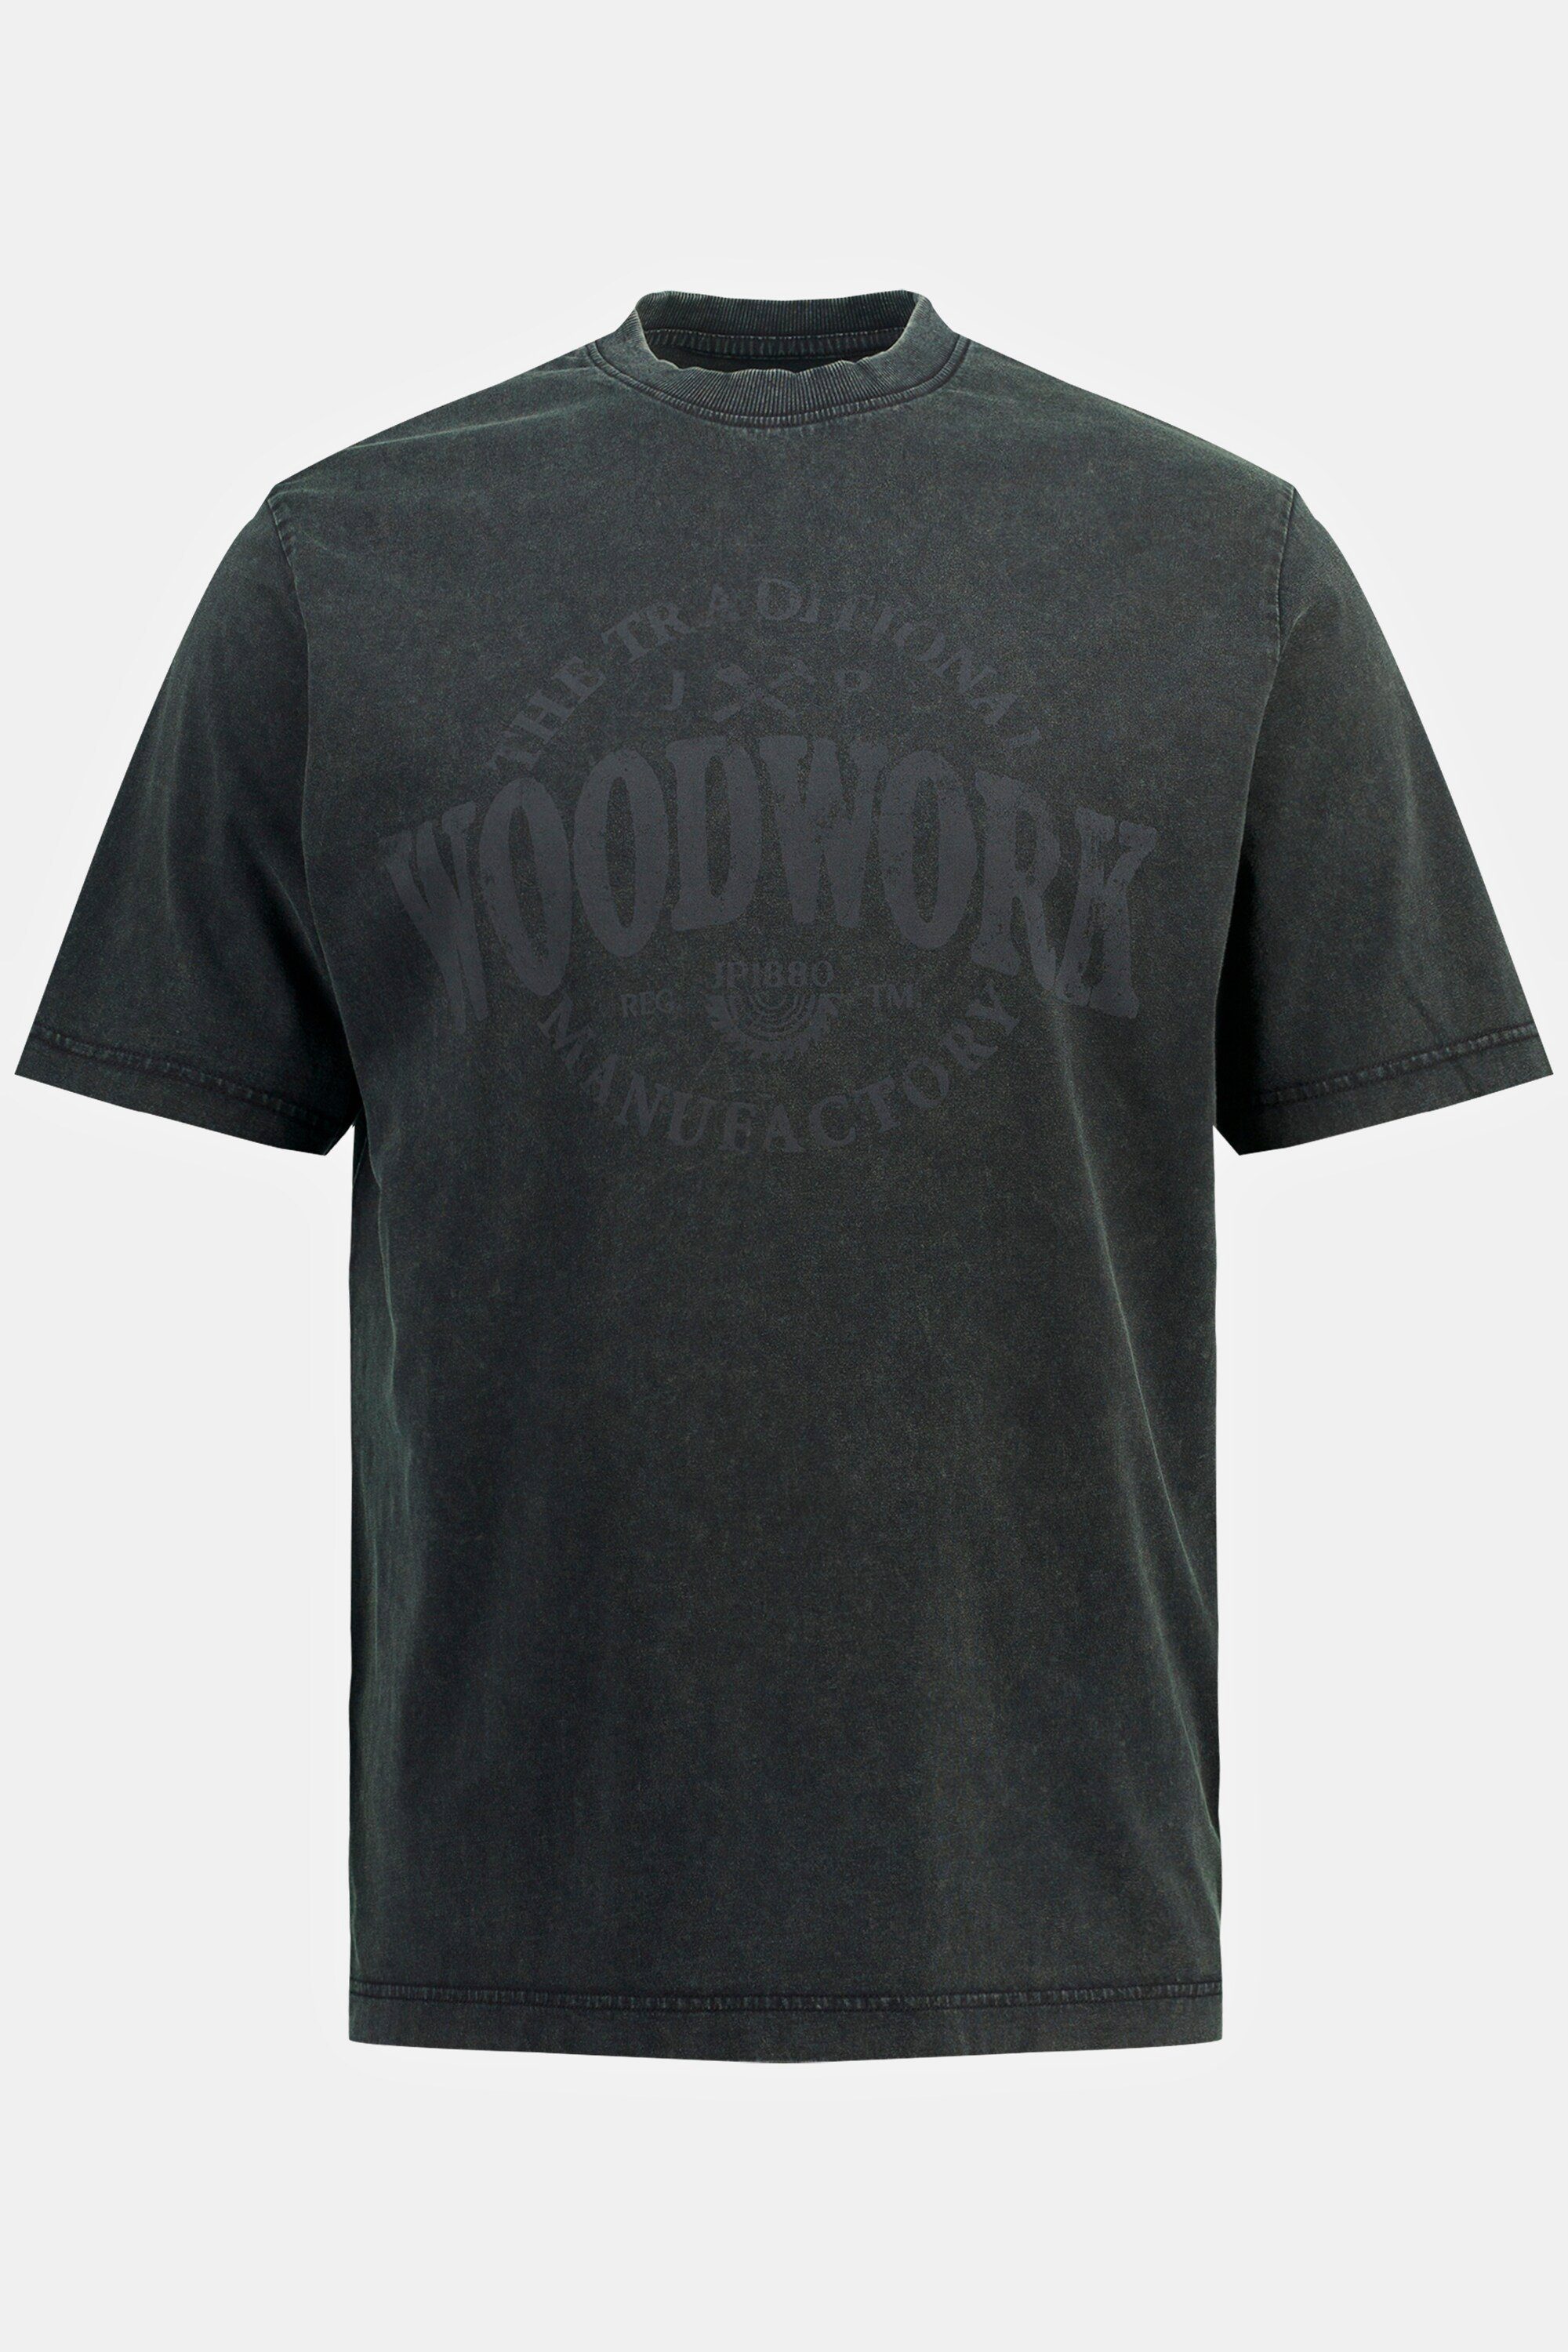 T-Shirt T-Shirt JP1880 Print Workwear Halbarm Rundhals